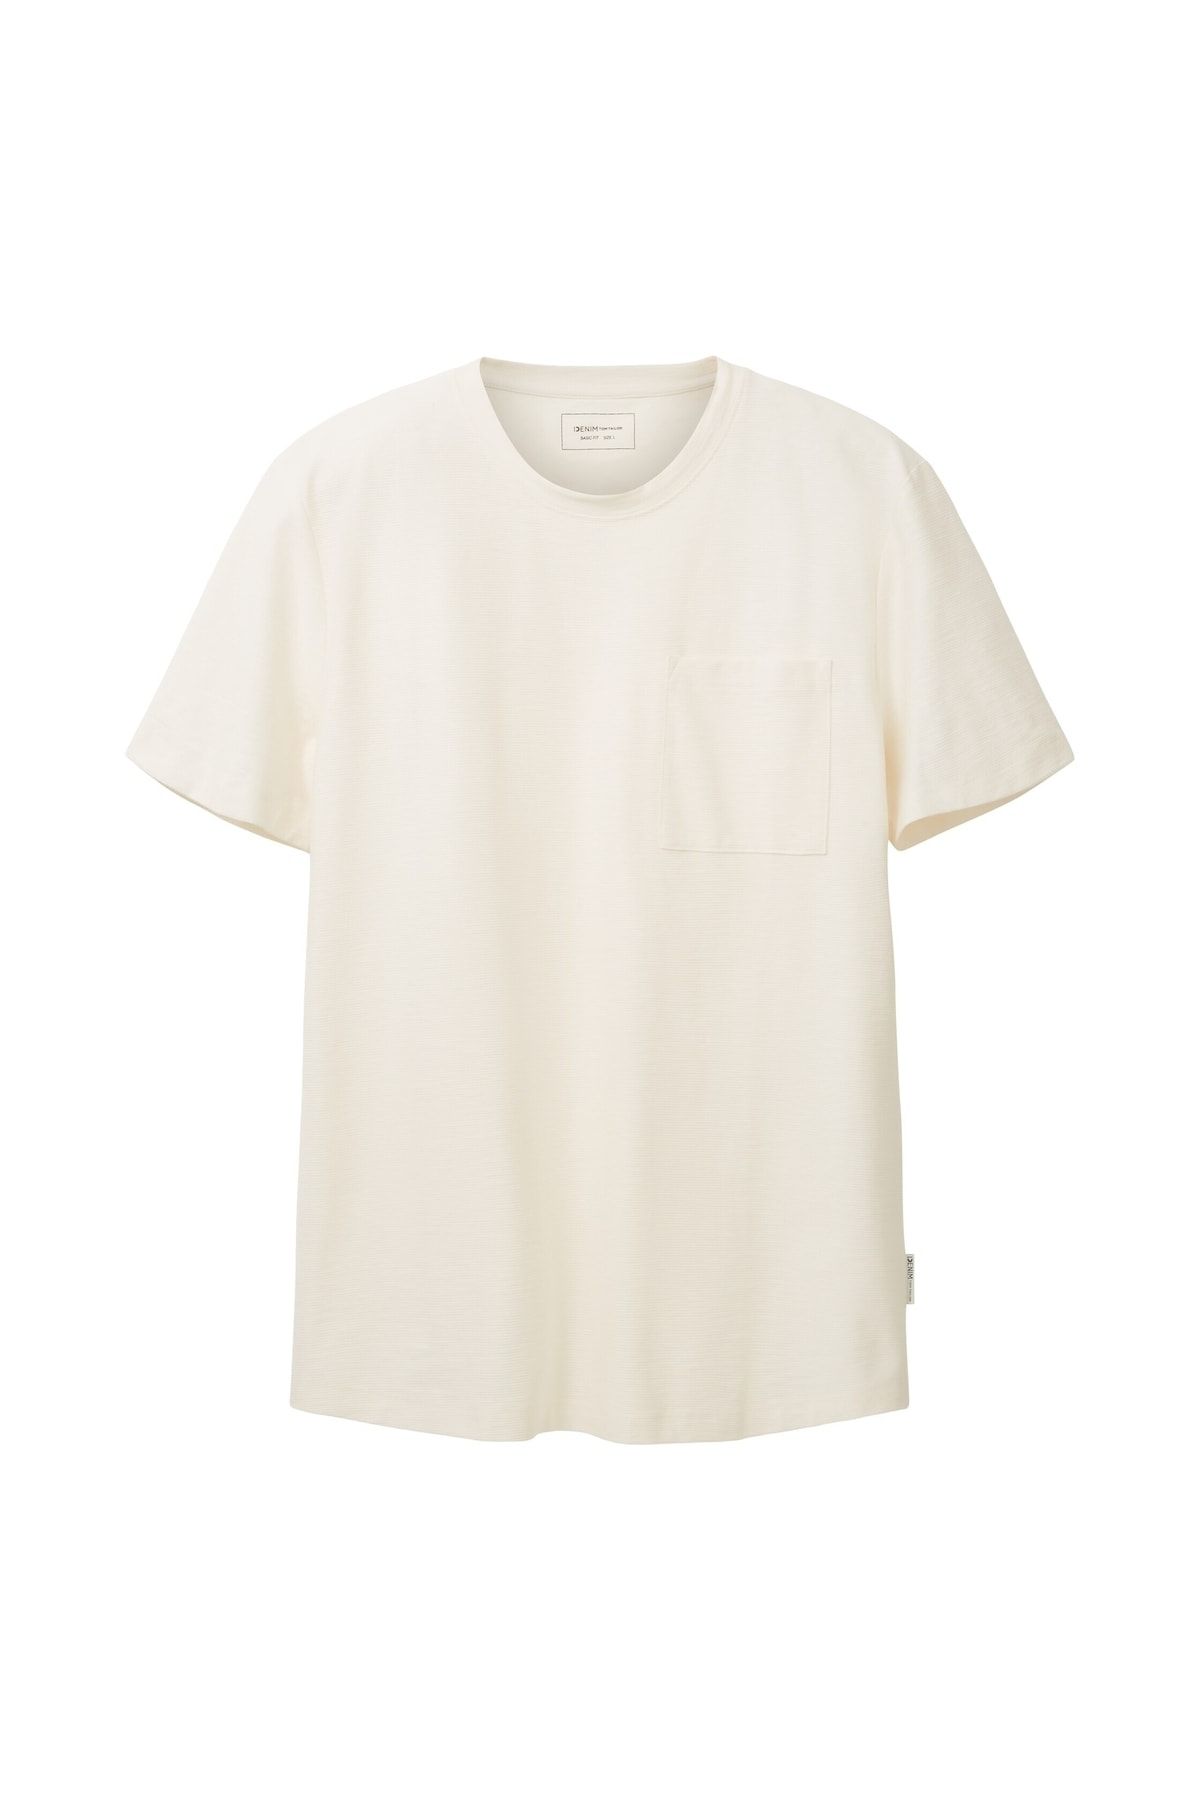 Tom Tailor - T-Shirt Fit Denim - Beige - Regular Trendyol